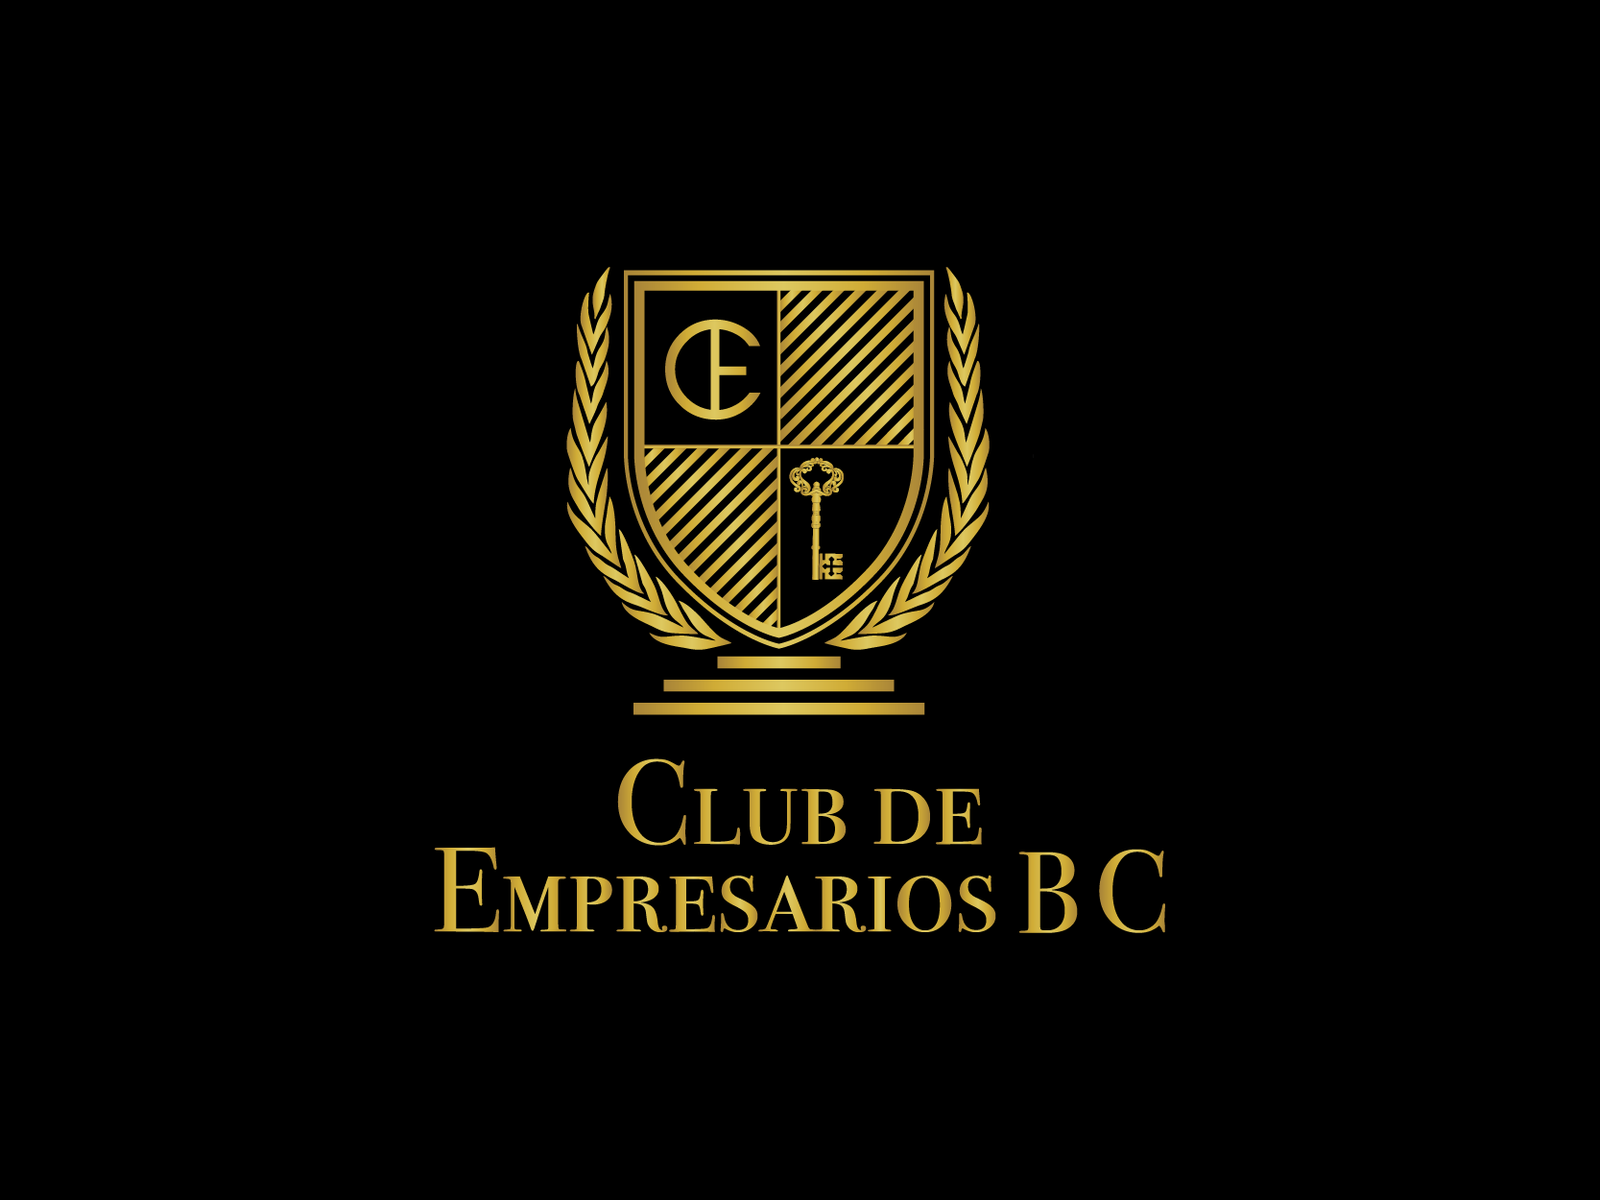 Logo Club de Empresarios BC by Diana Corona on Dribbble